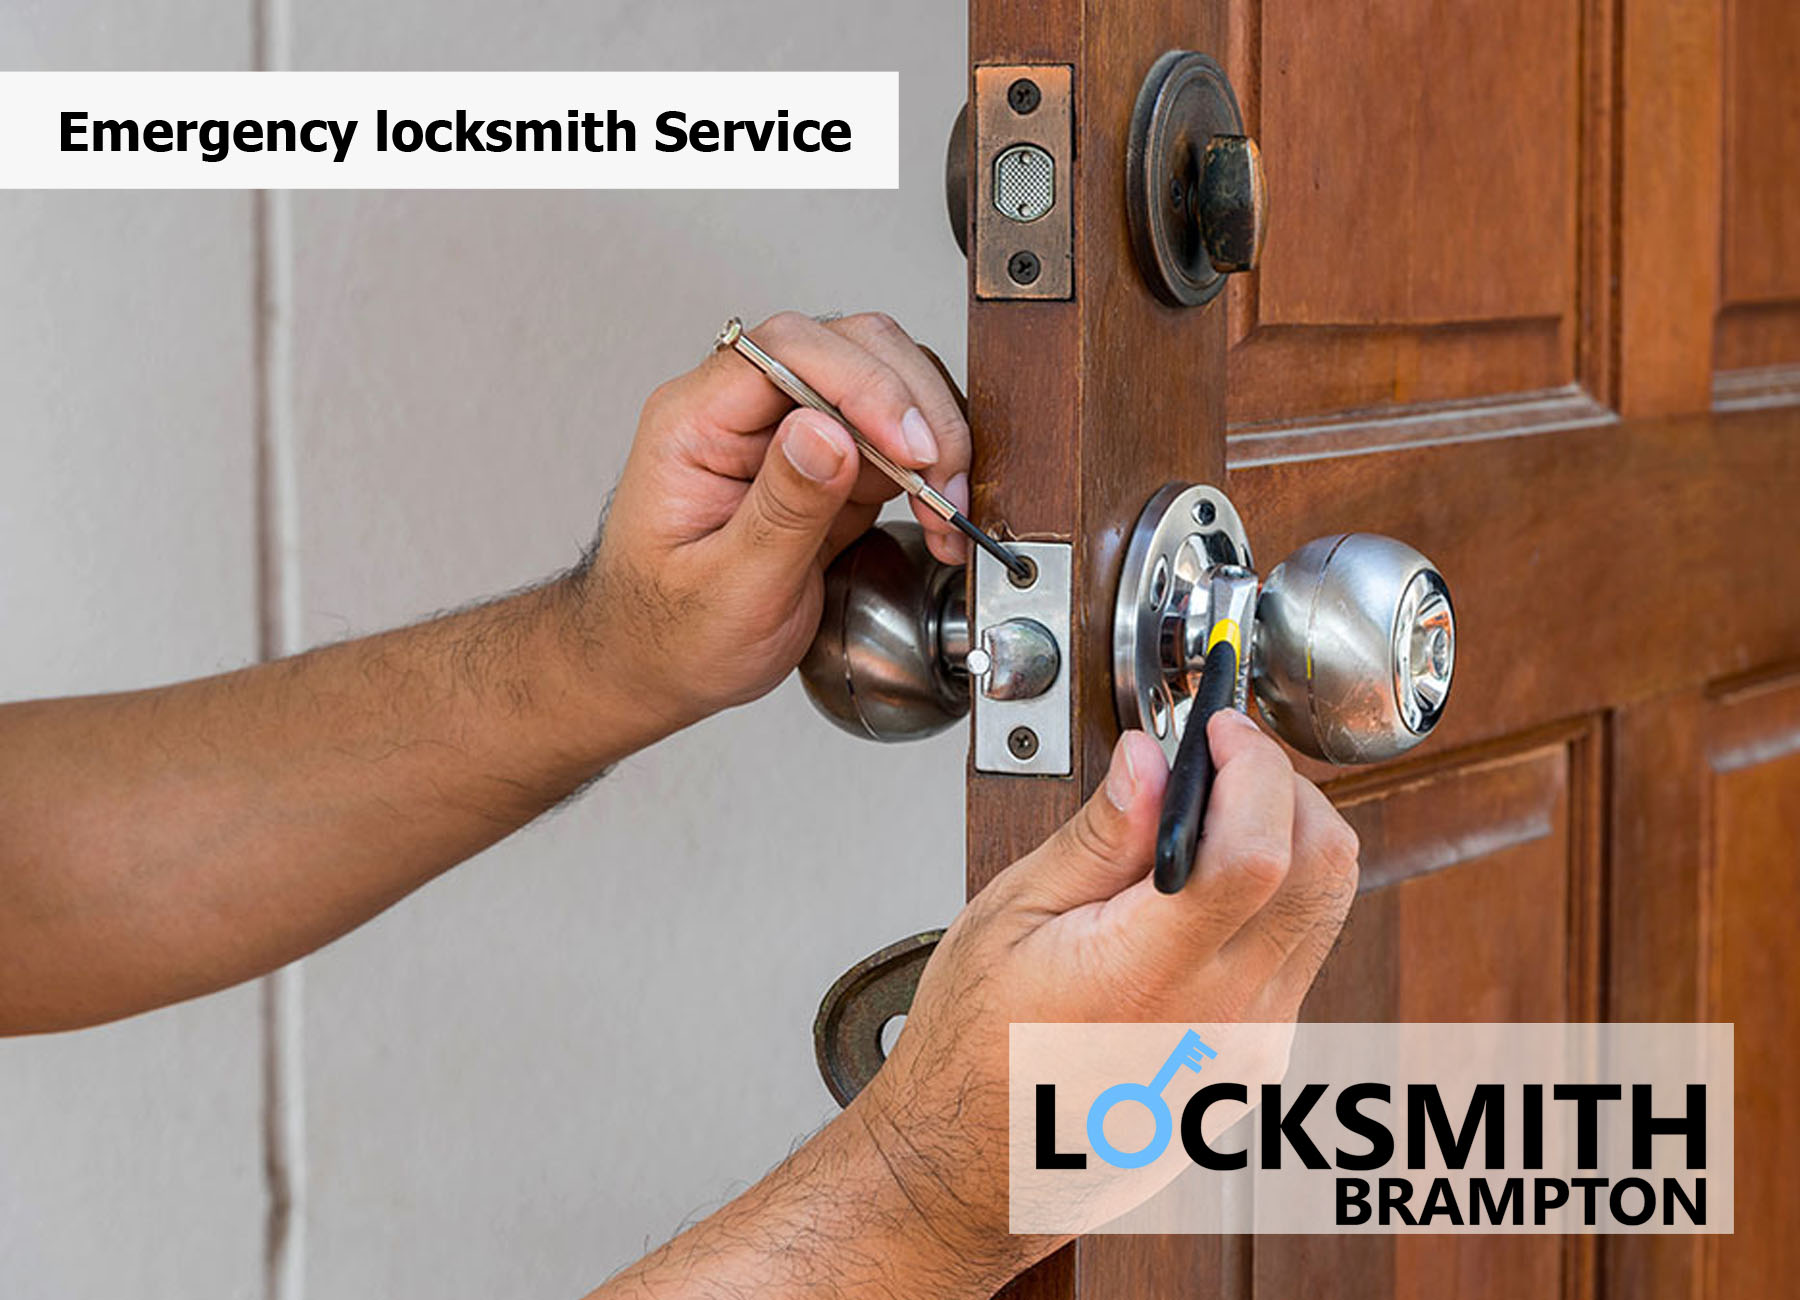 Emergency Locksmith Services in Brampton, ON